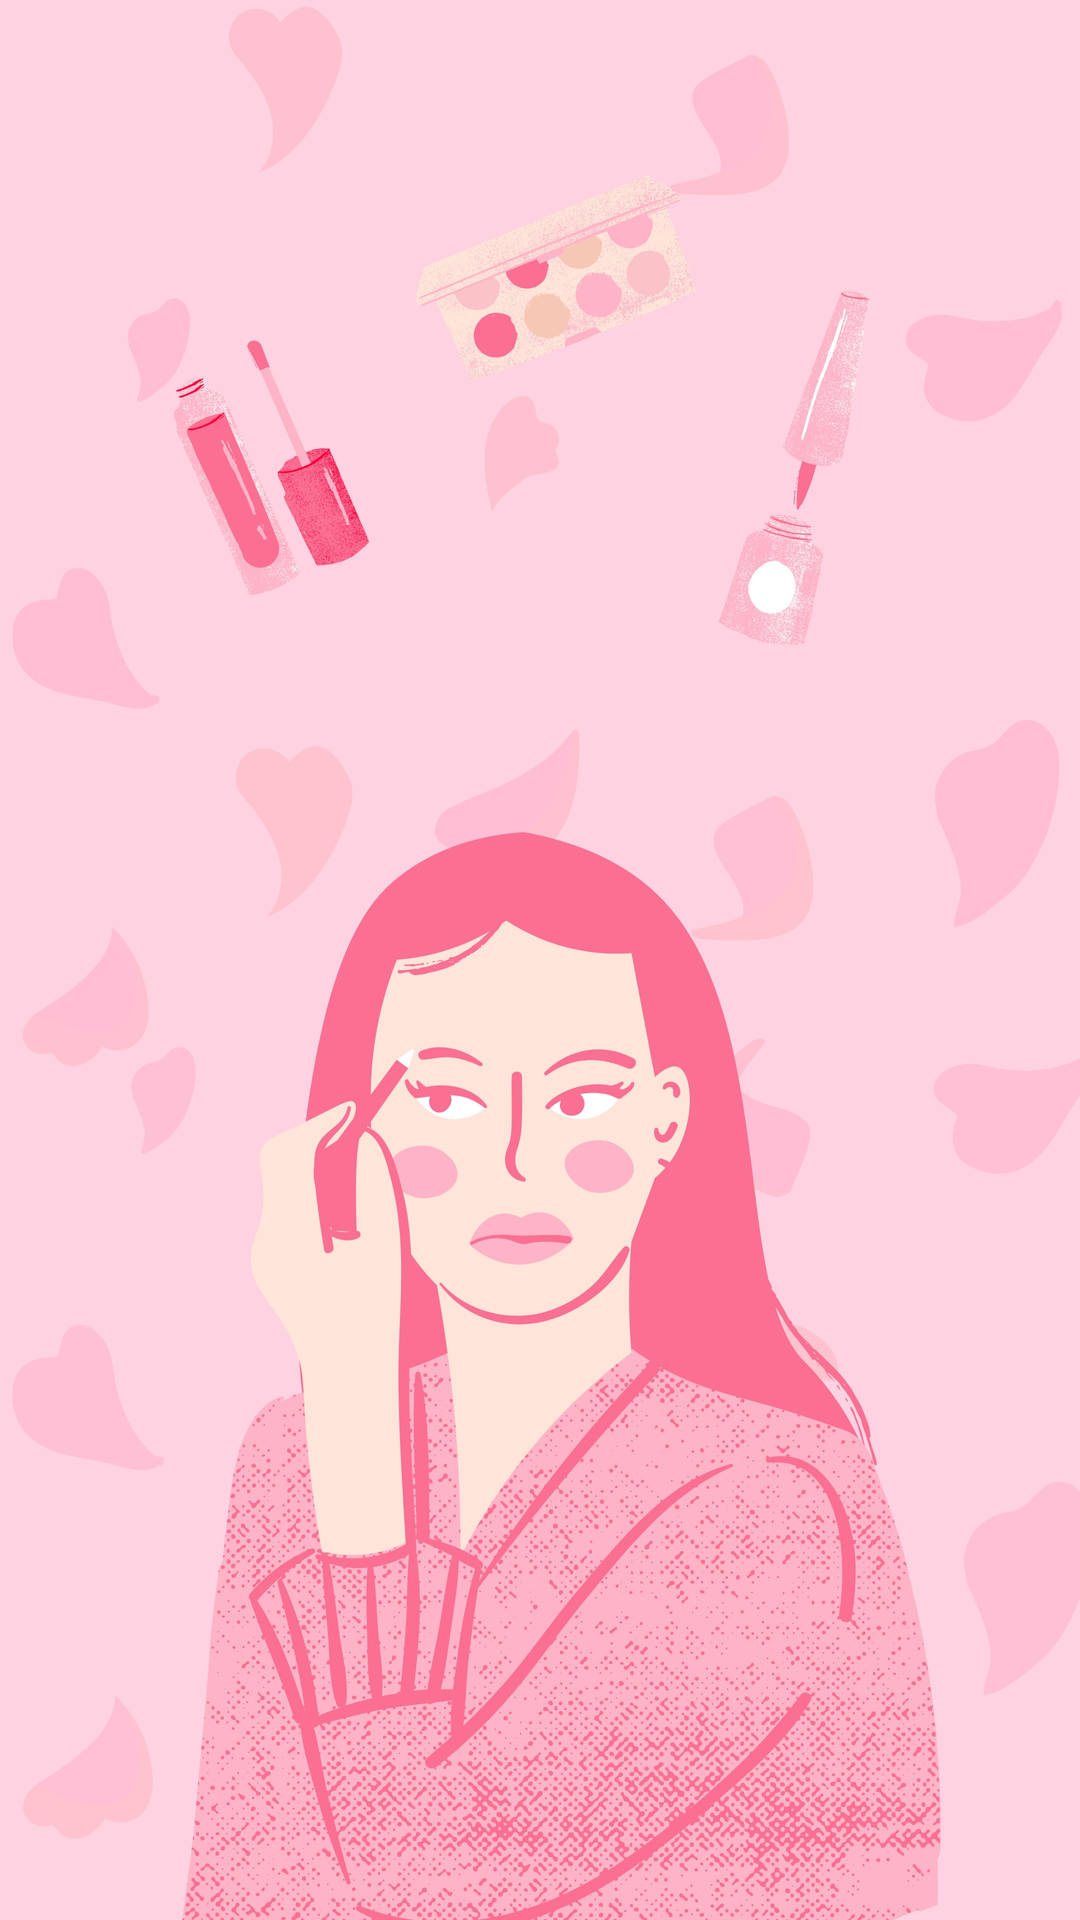 Gráficode Maquillaje Femenino En Tonos Rosados Fondo de pantalla